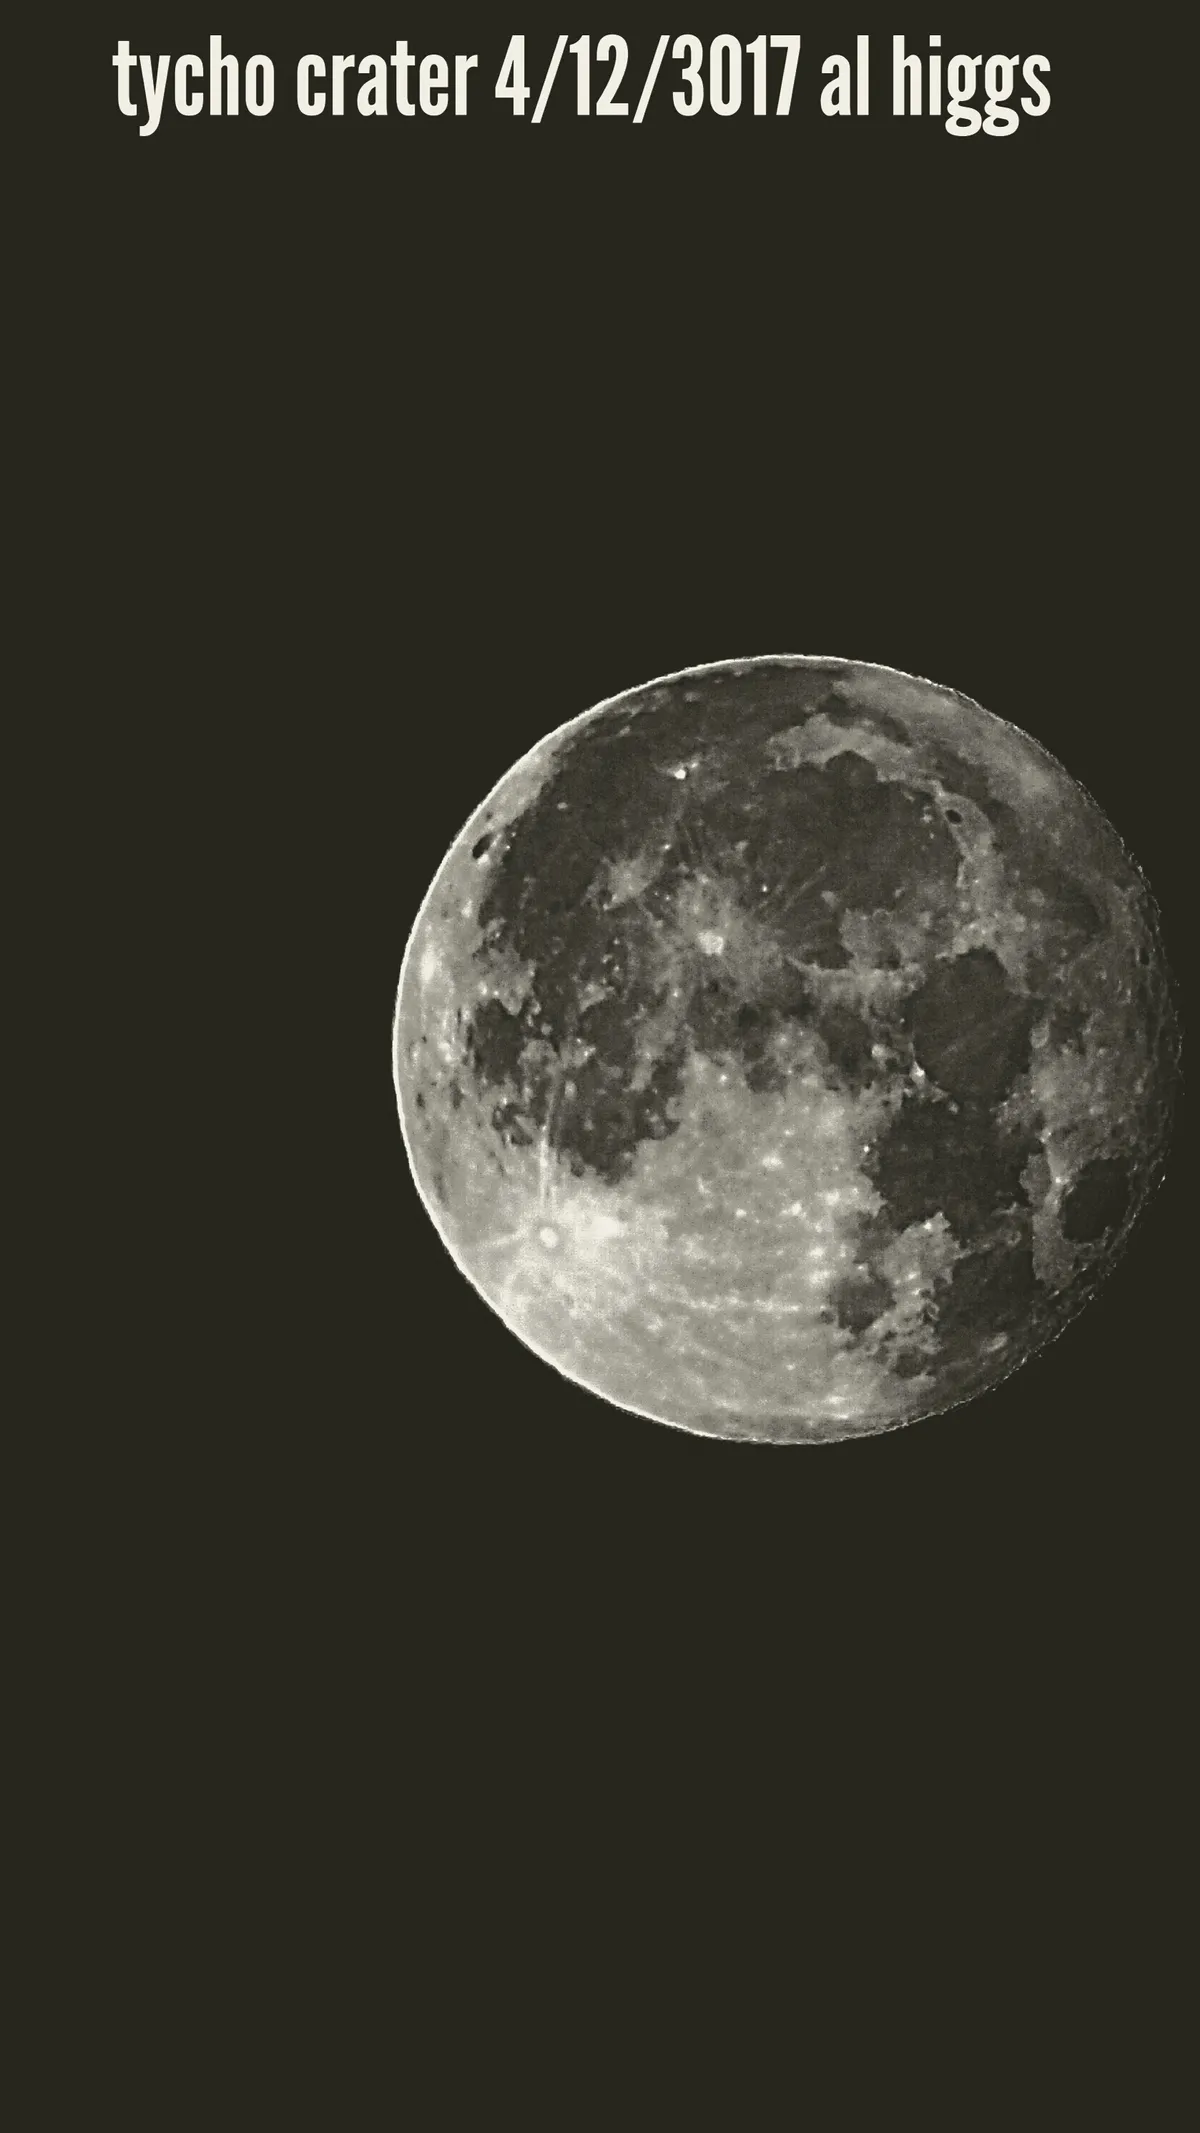 Dark Moon by Alex Higgs, Hessle, E. Yorkshire, UK. Equipment: 20x80 Binoculars, Smartphone.